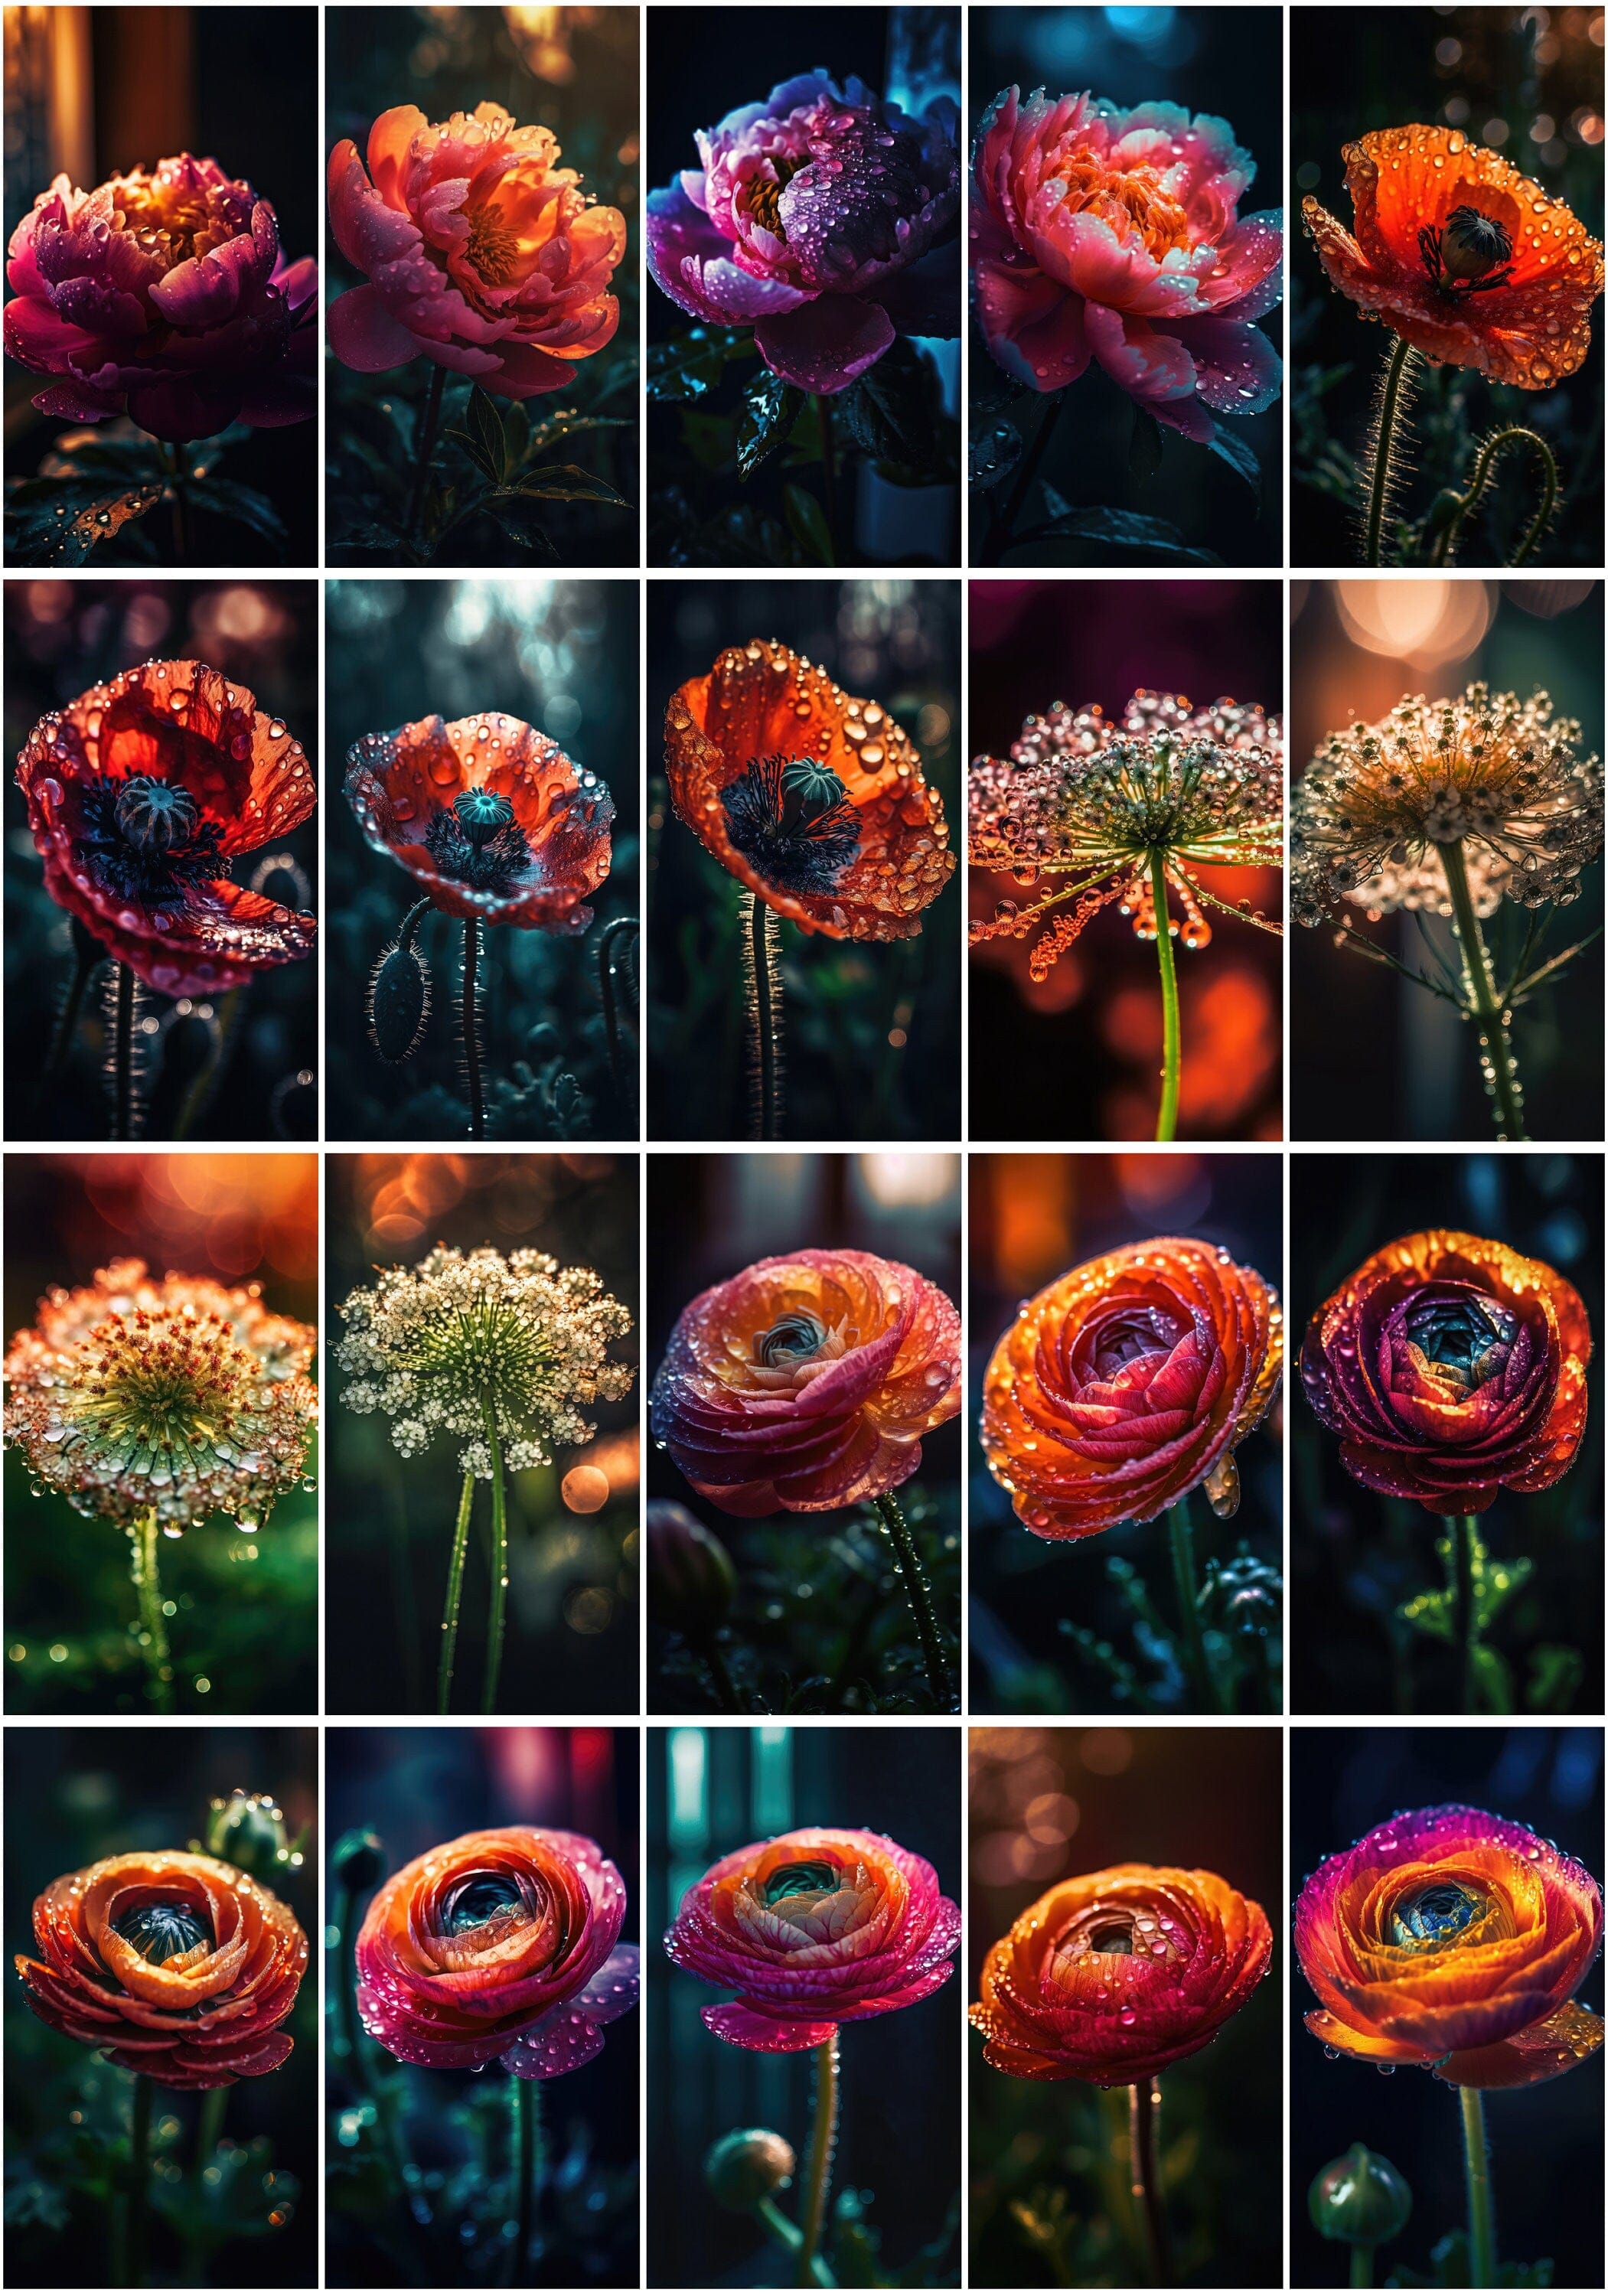 Enchanting Floral Waterdrop Images Bundle – 190 High-Quality Flower Photos with Delicate Waterdrop Digital Download Sumobundle